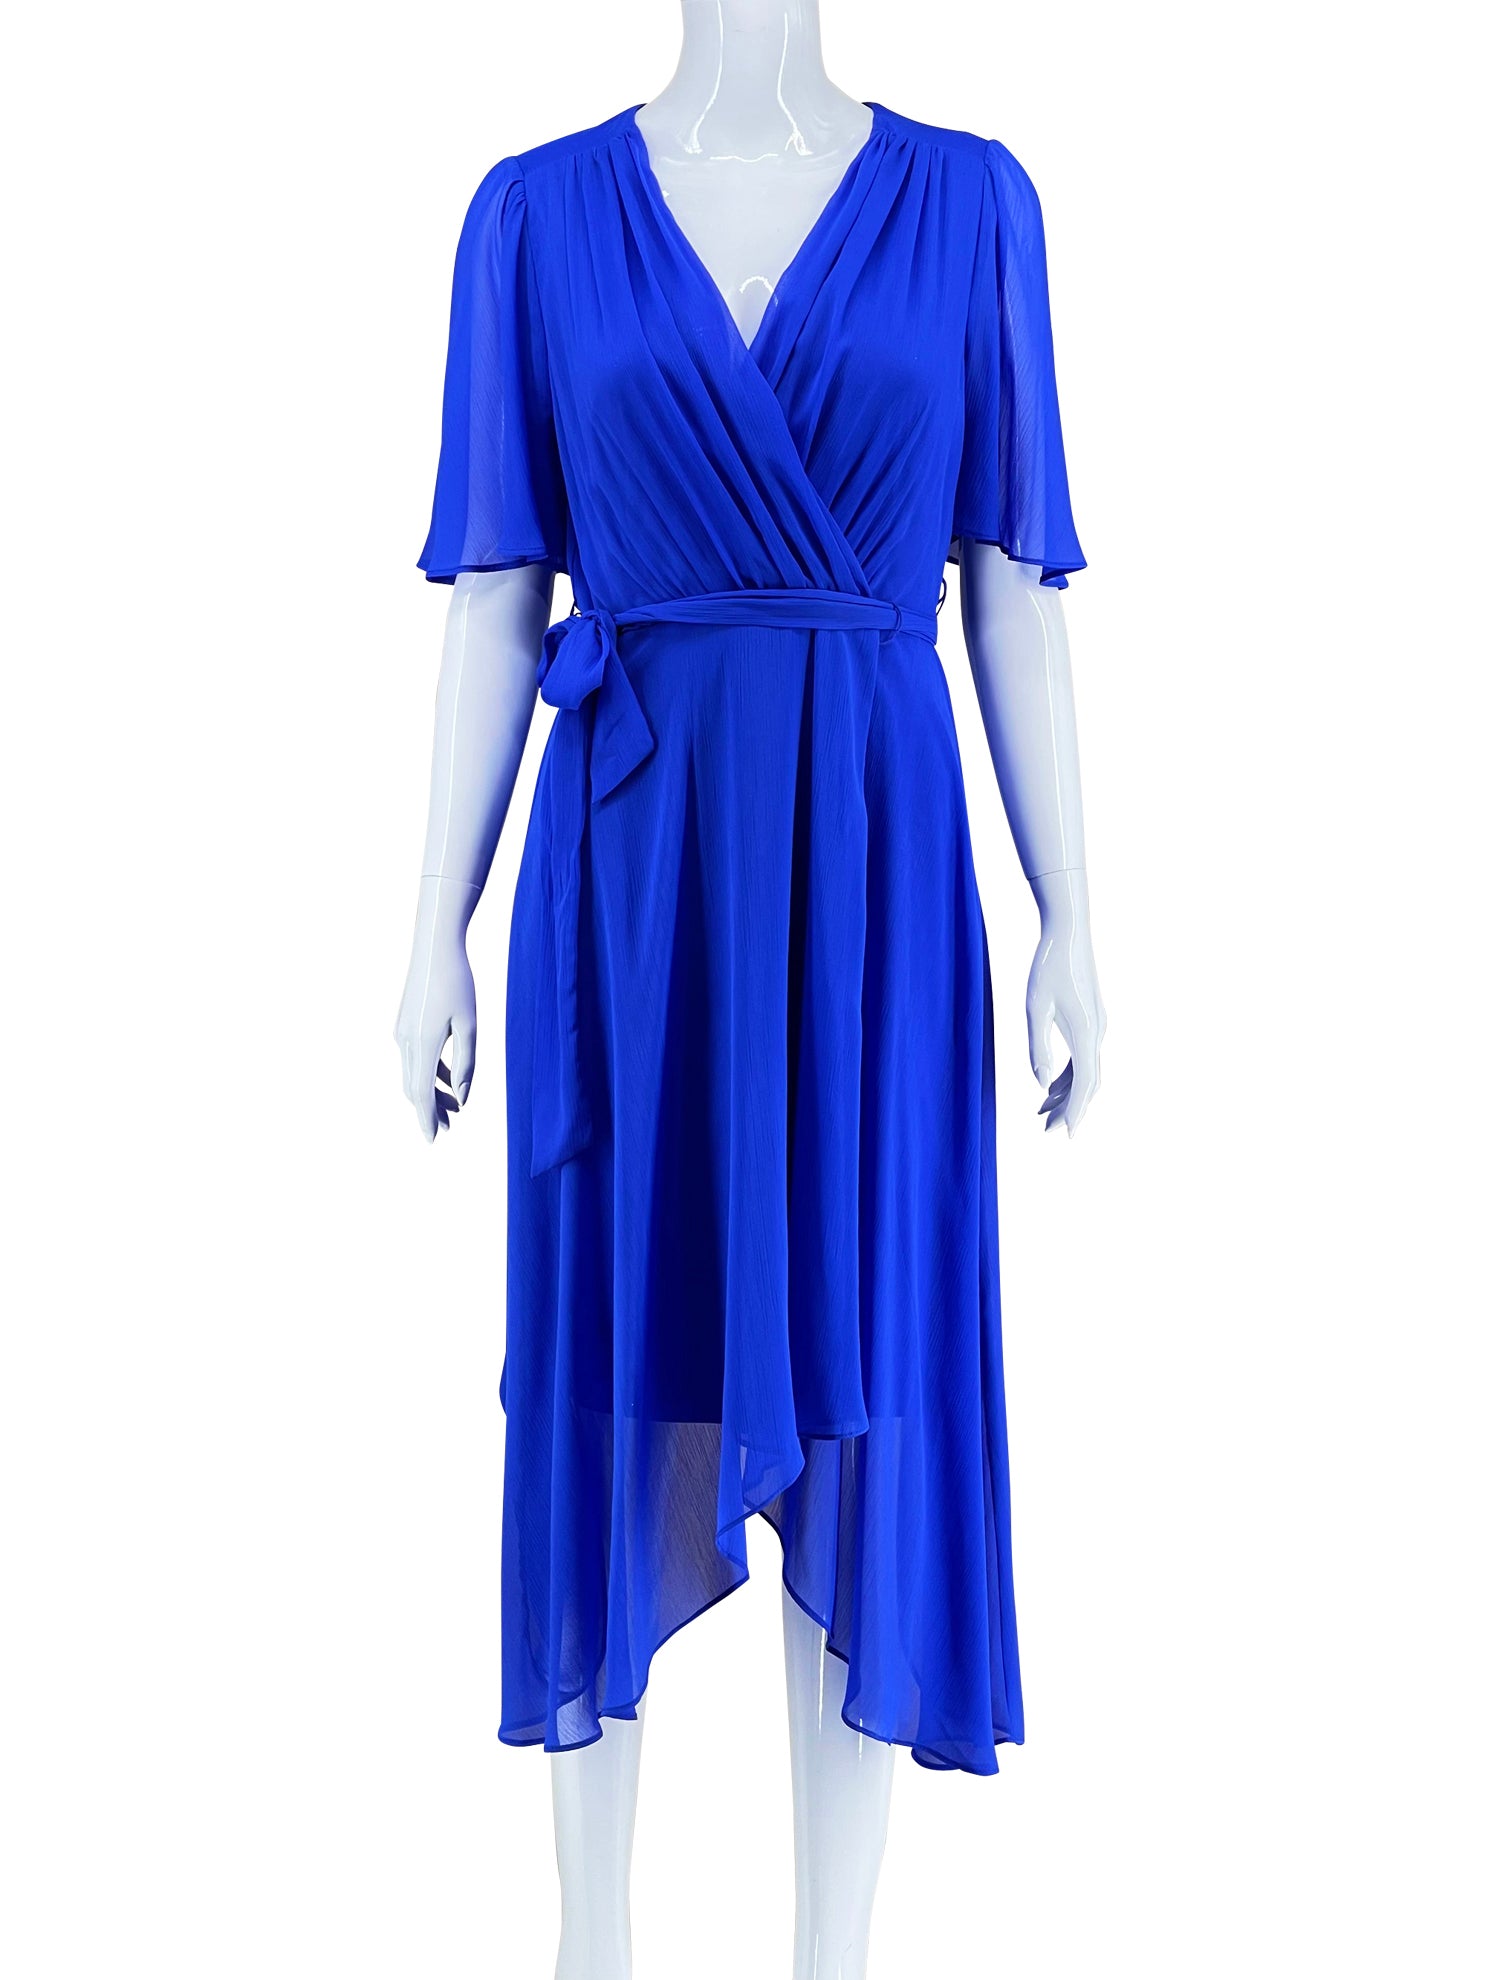 DNKY Pastel Blue Wrap Dress